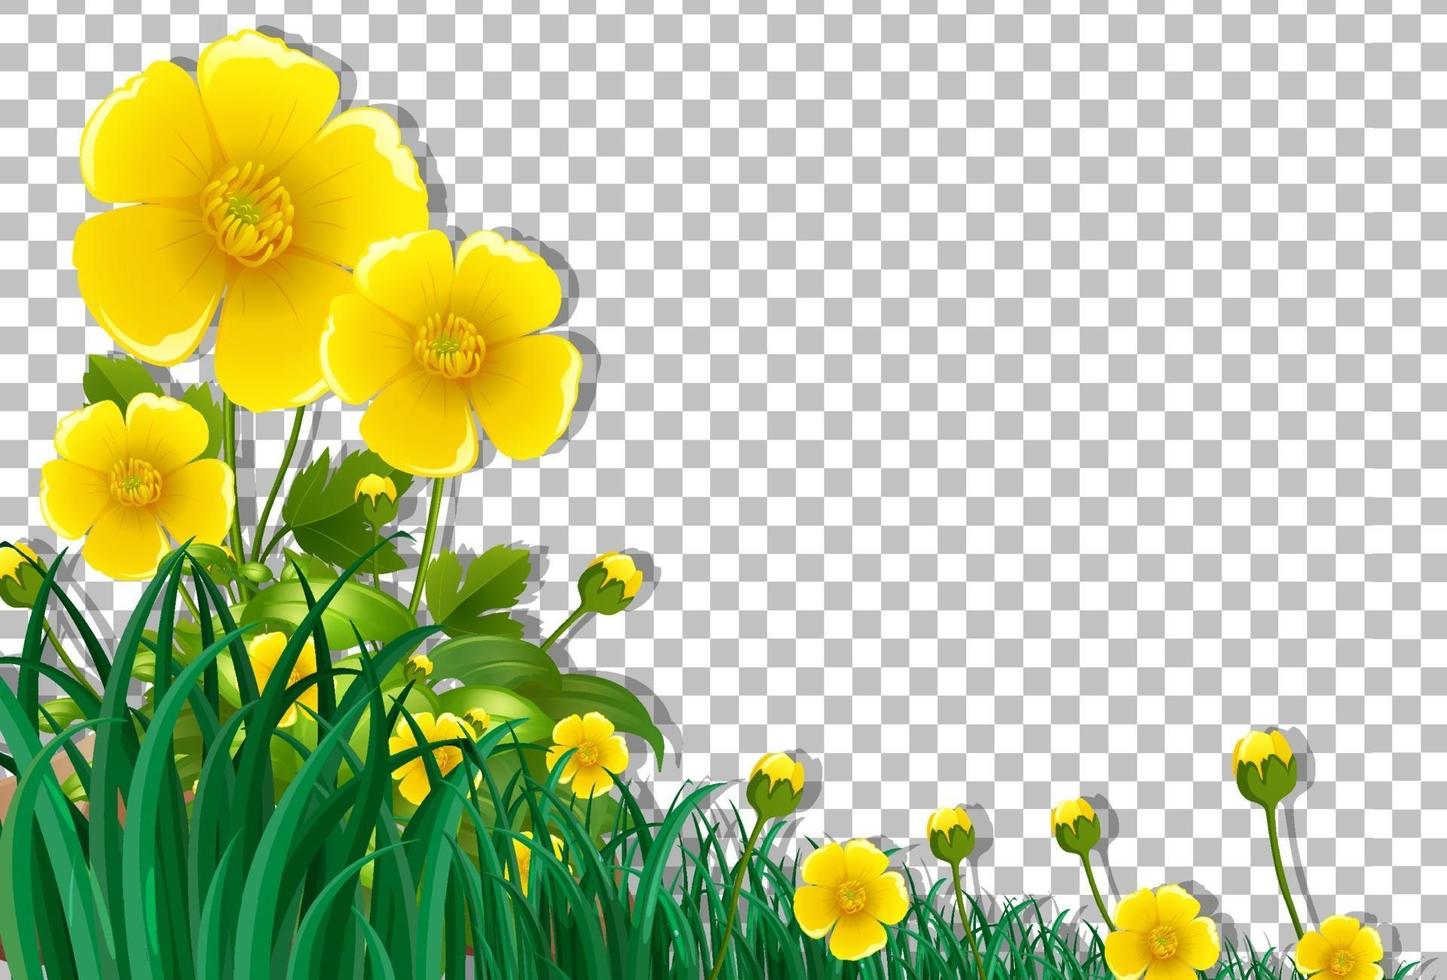 Yellow flower field frame template vector